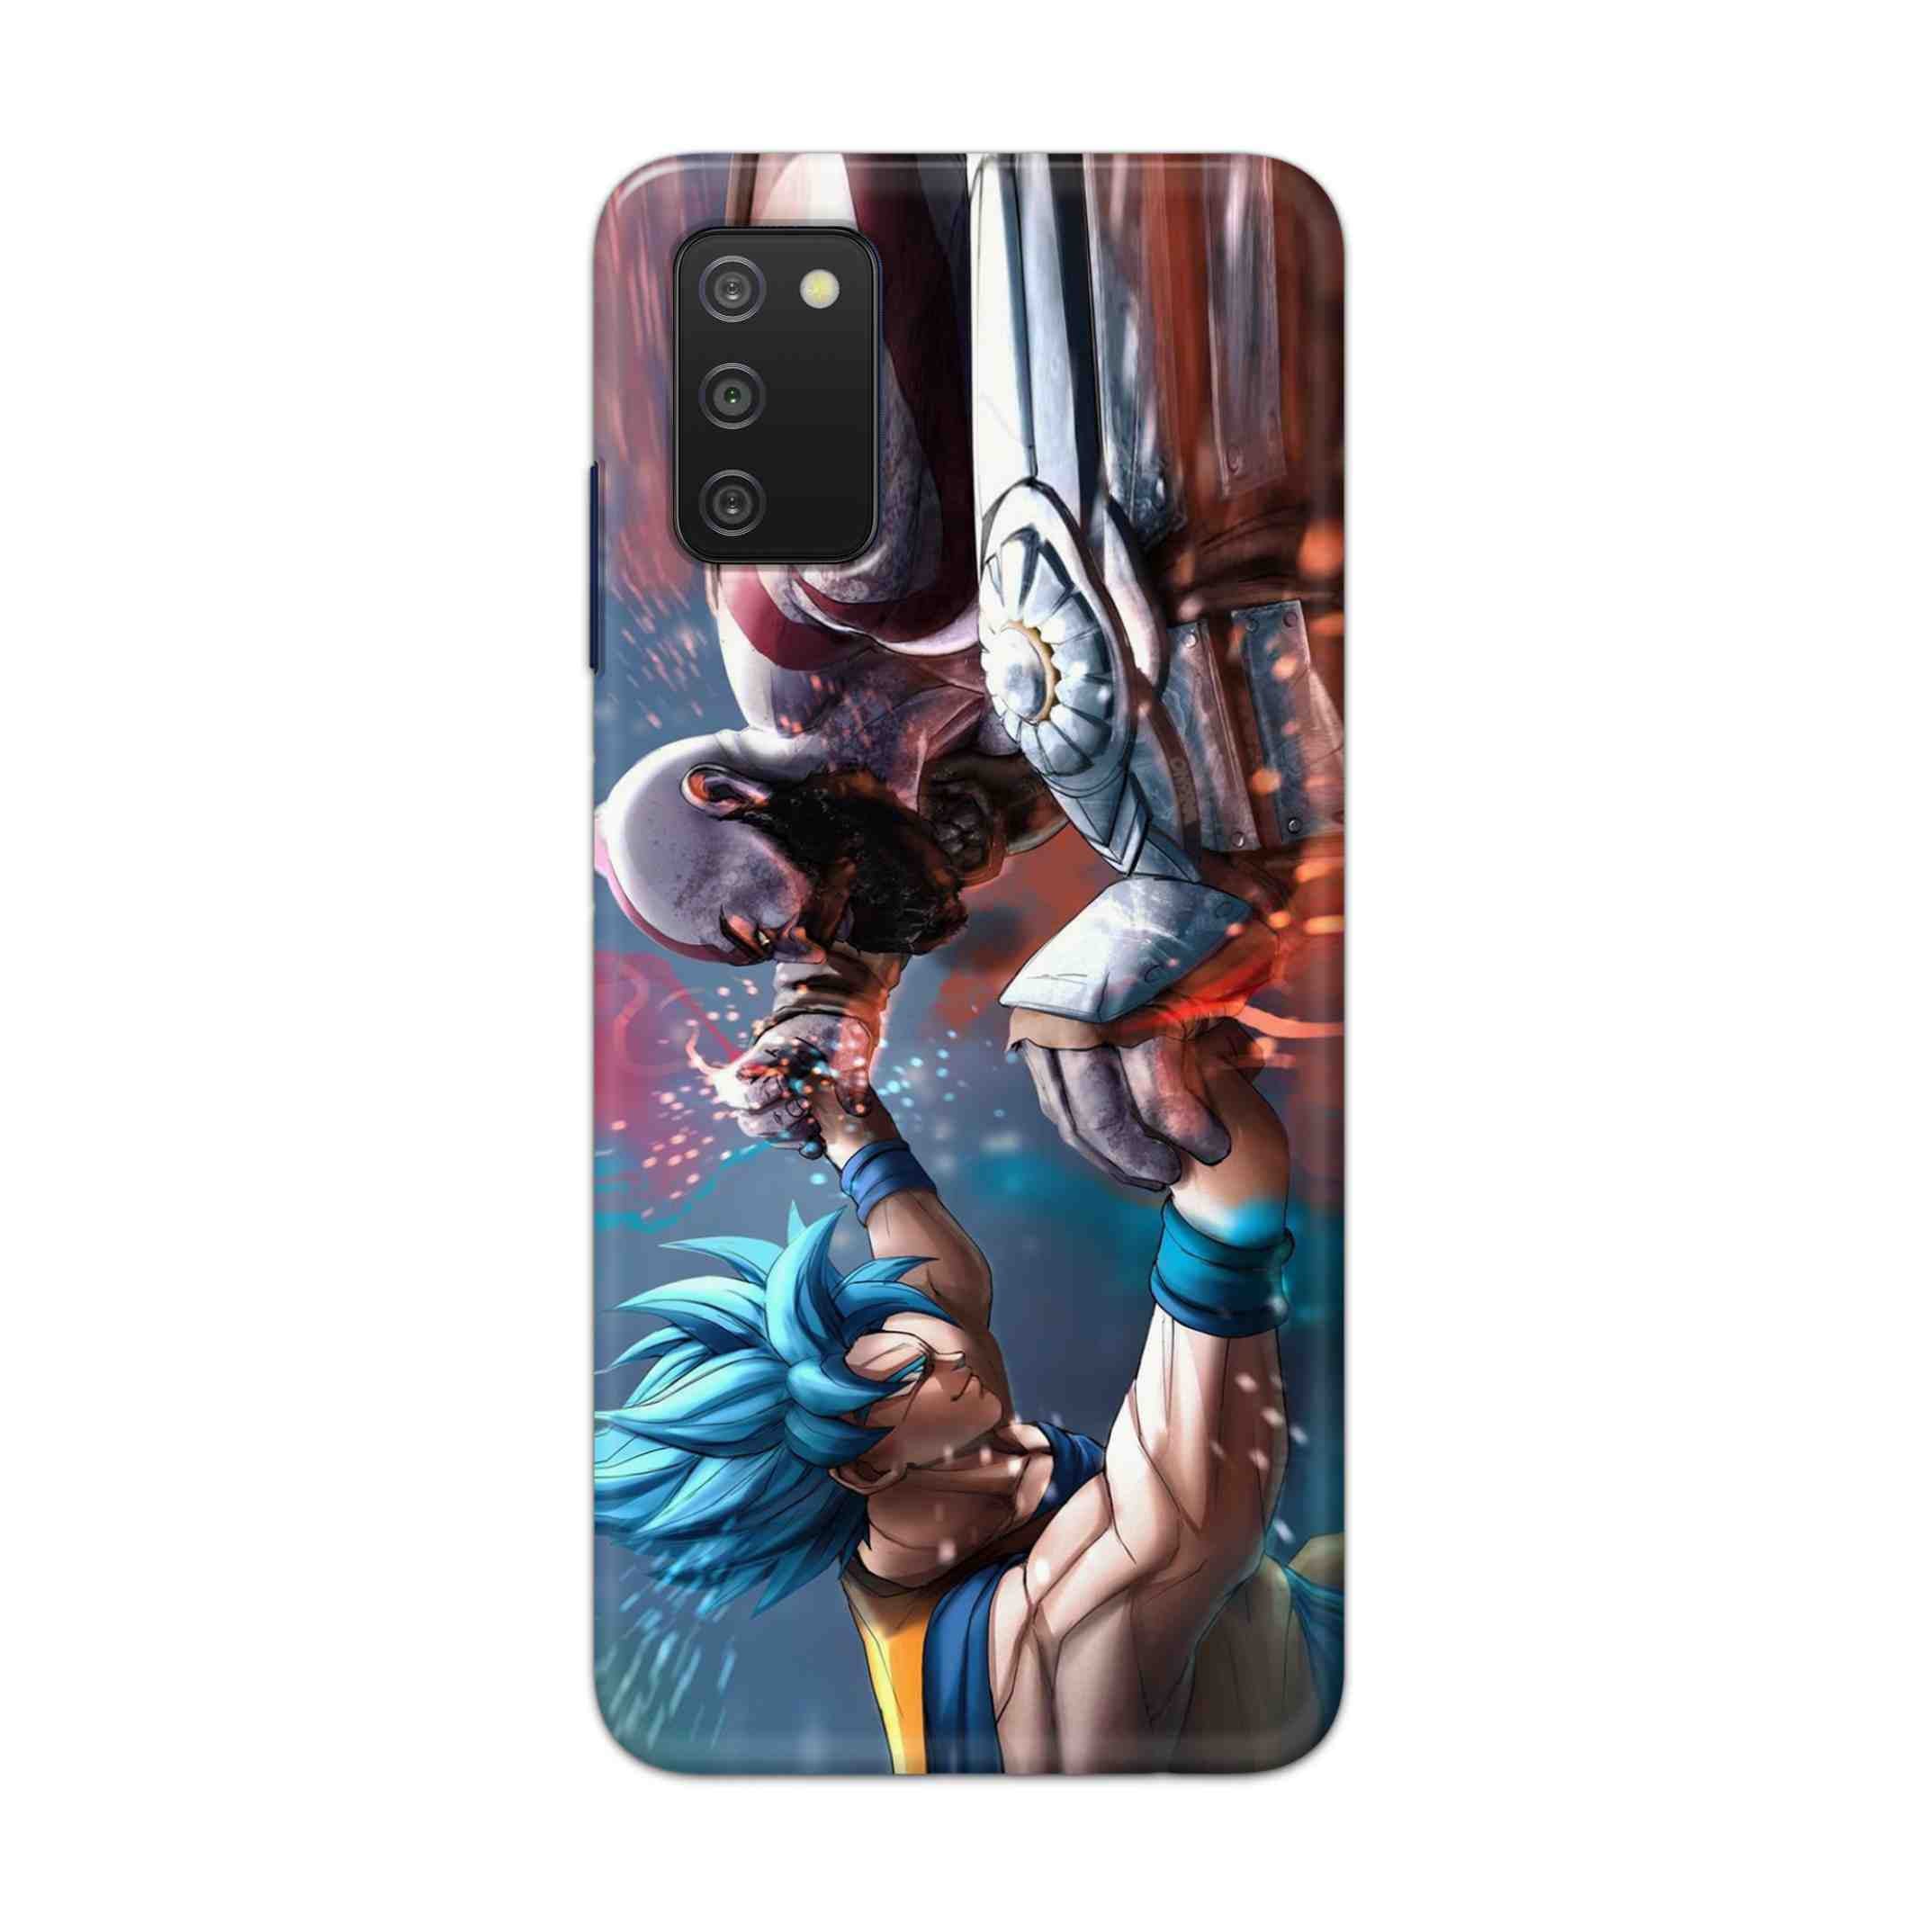 Buy Goku Vs Kratos Hard Back Mobile Phone Case Cover For Samsung A03s Online